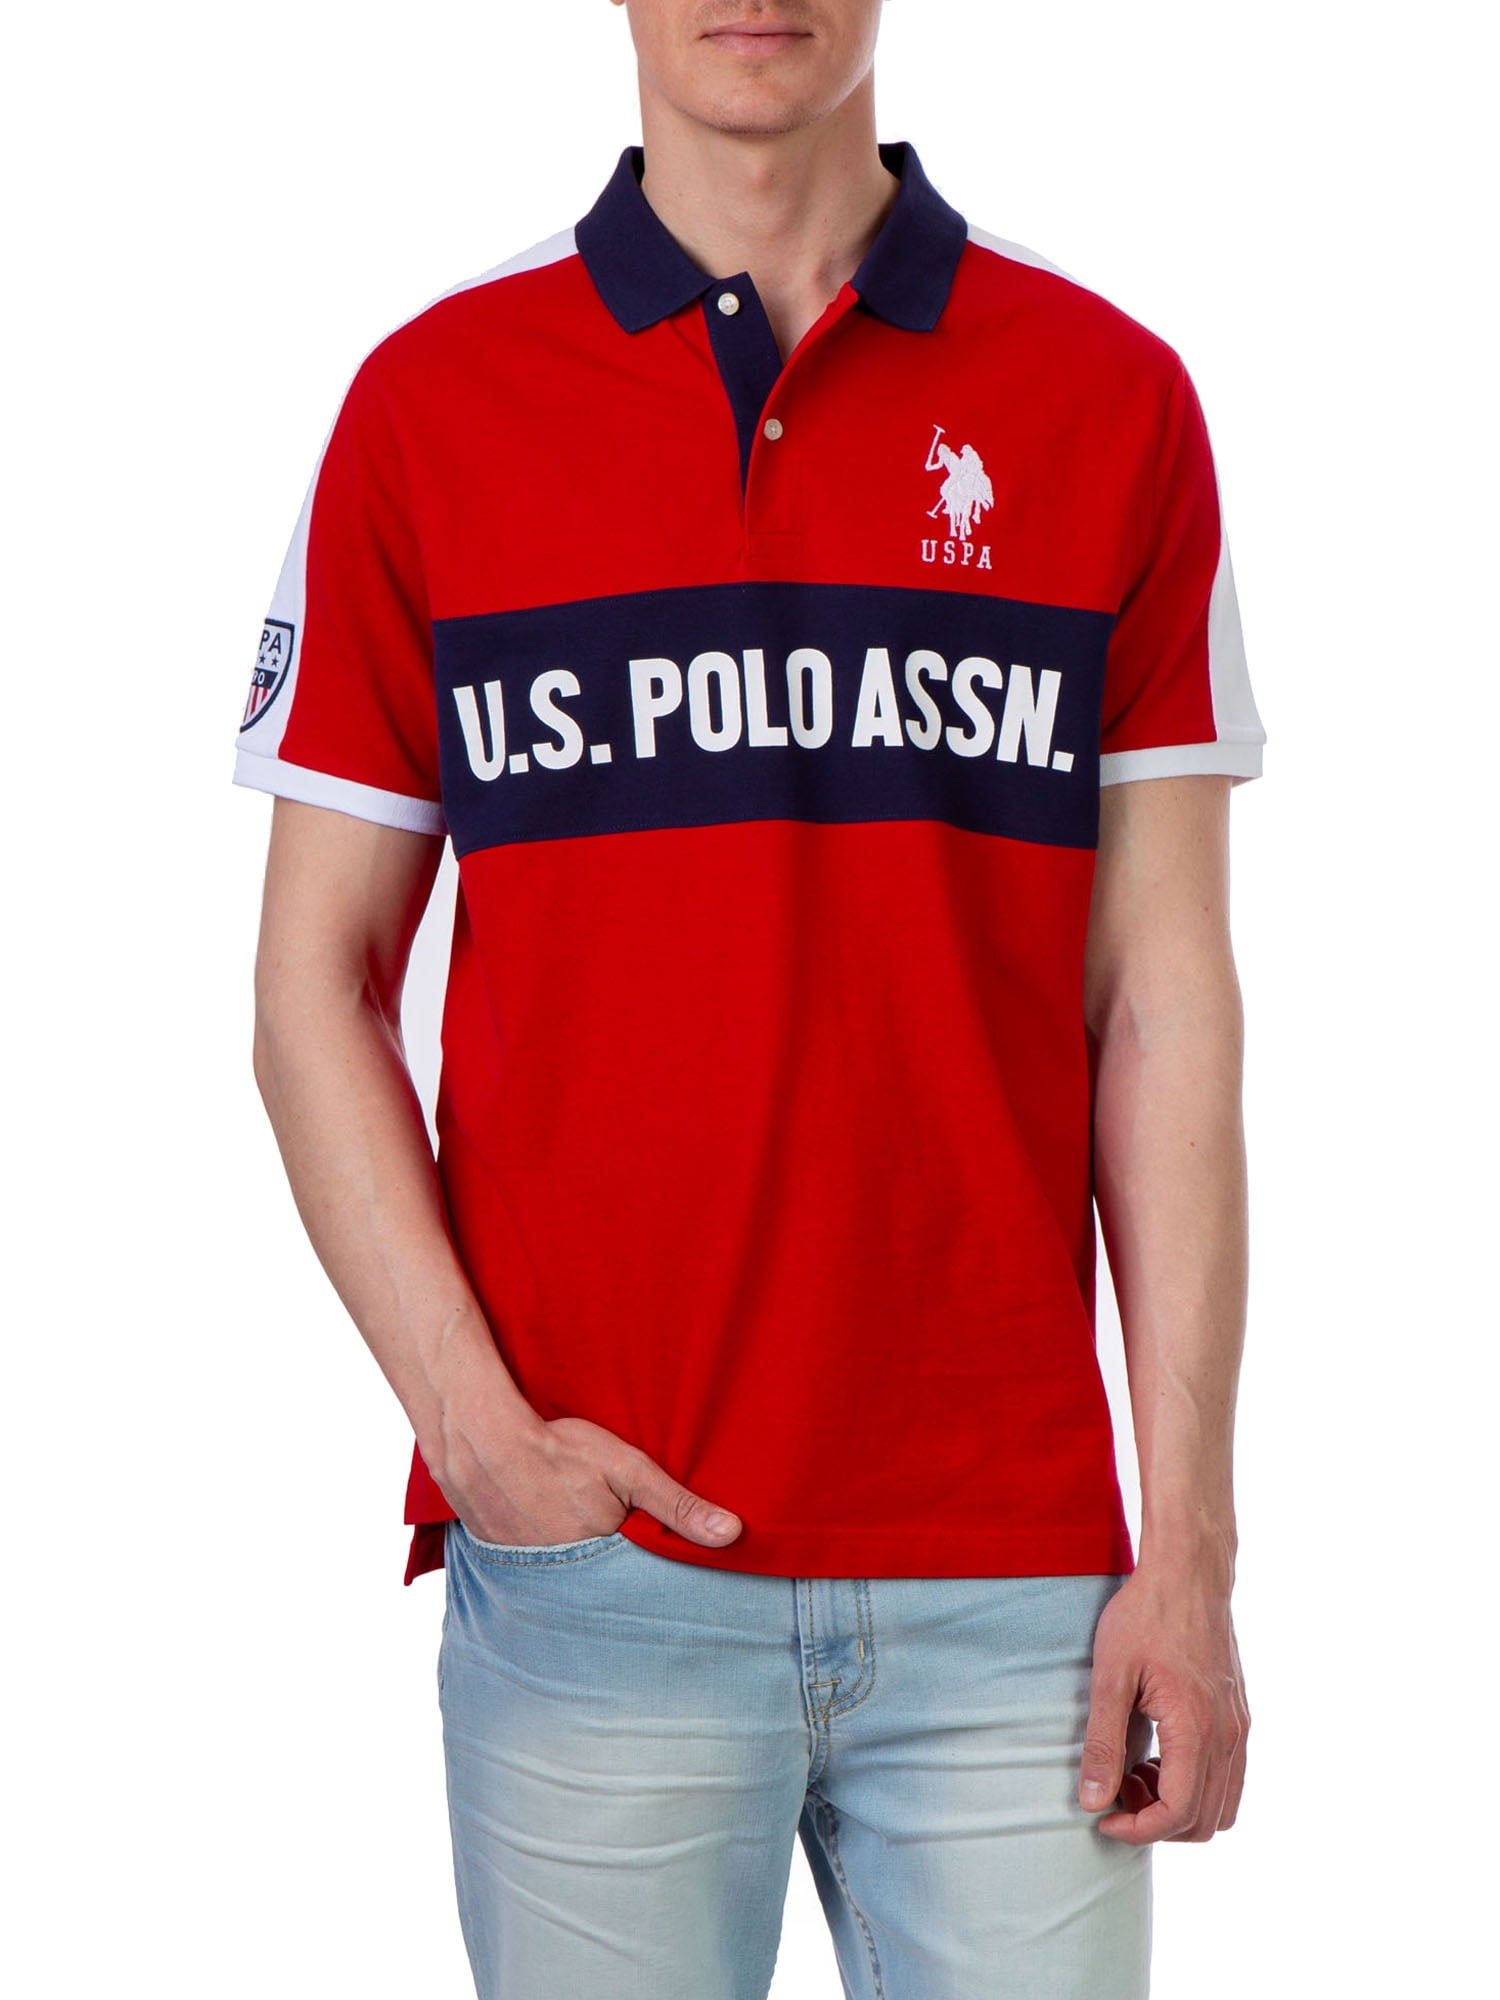 U.S Polo Assn Mens Slim Fit Color Block Short Sleeve Pique Polo Shirt 